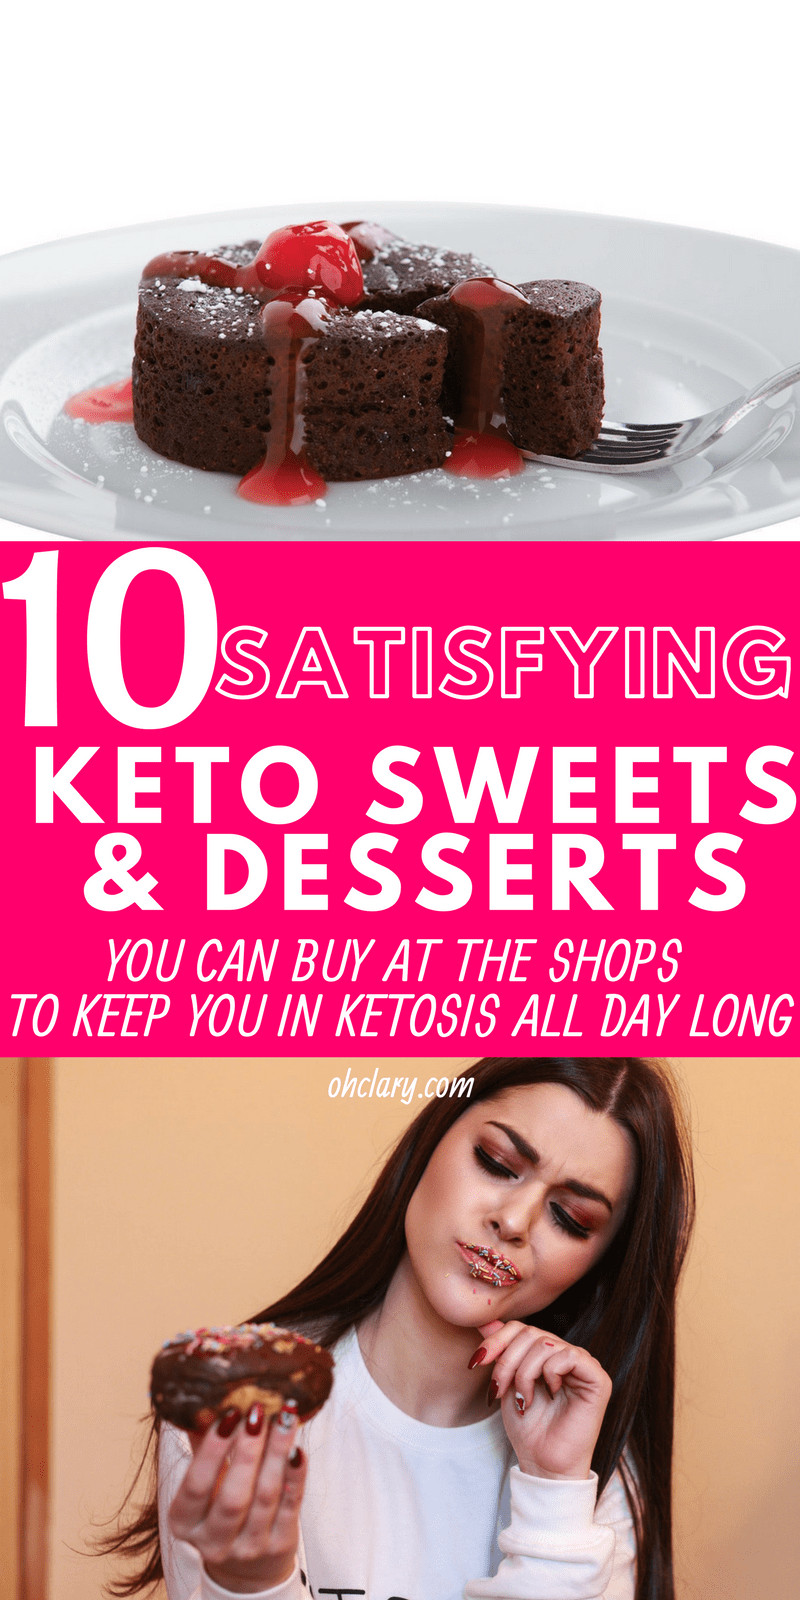 Low Cholesterol Desserts Store Bought
 15 Keto Desserts You Can Buy Best Store Bought Keto